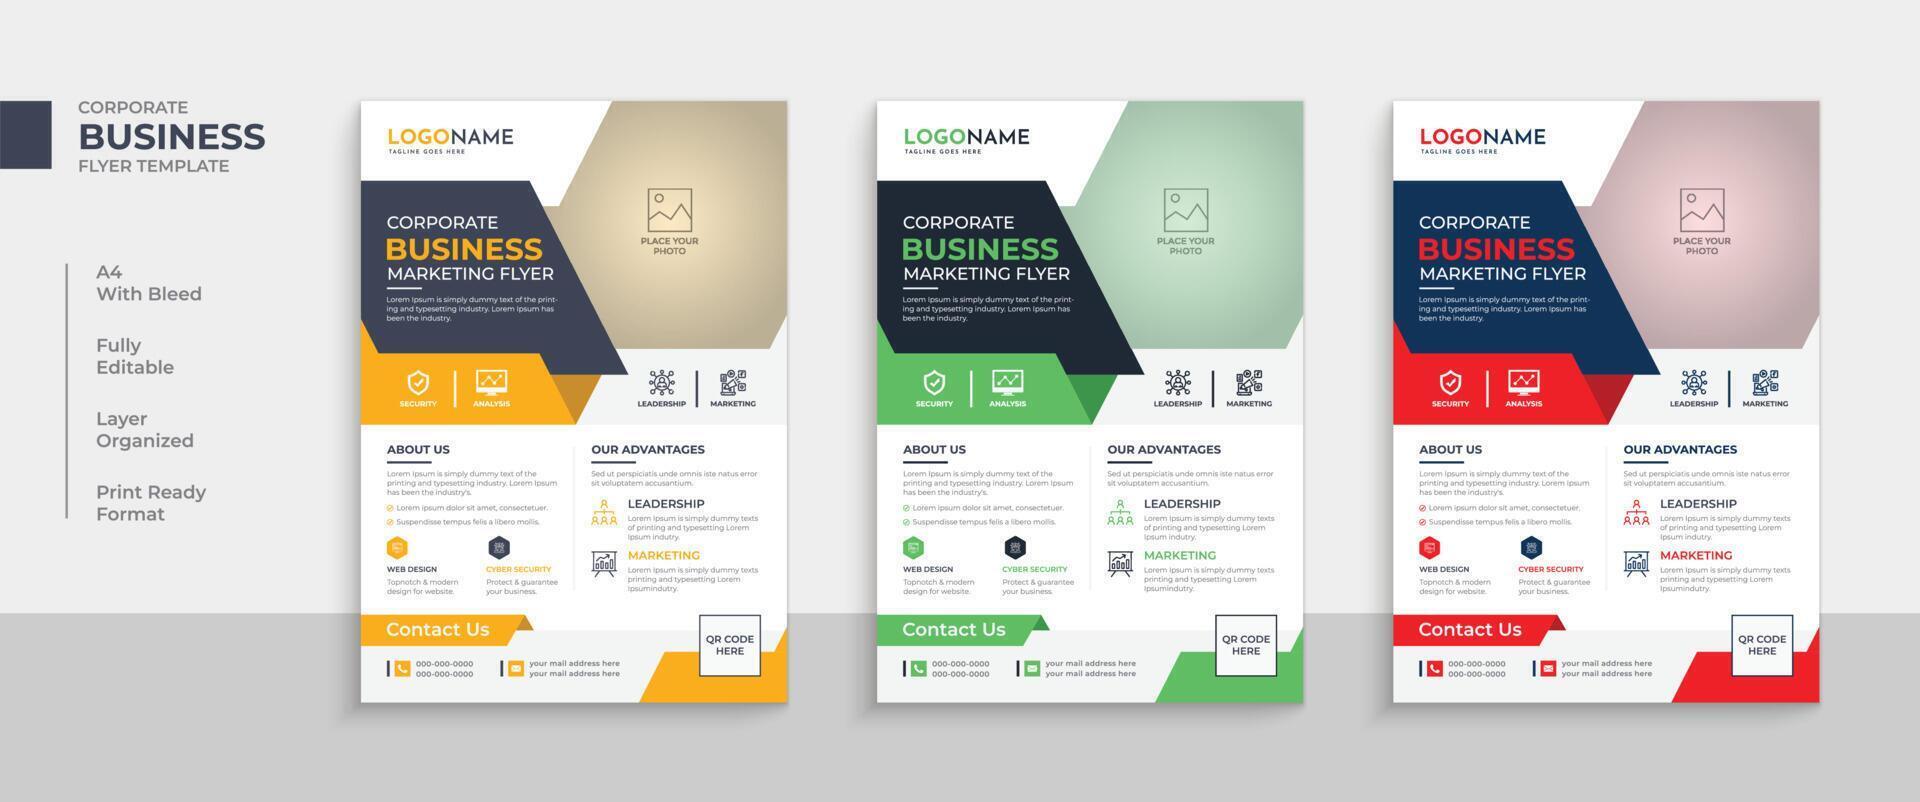 Modern corporate business flyer design or marketing flyer template layout design vector